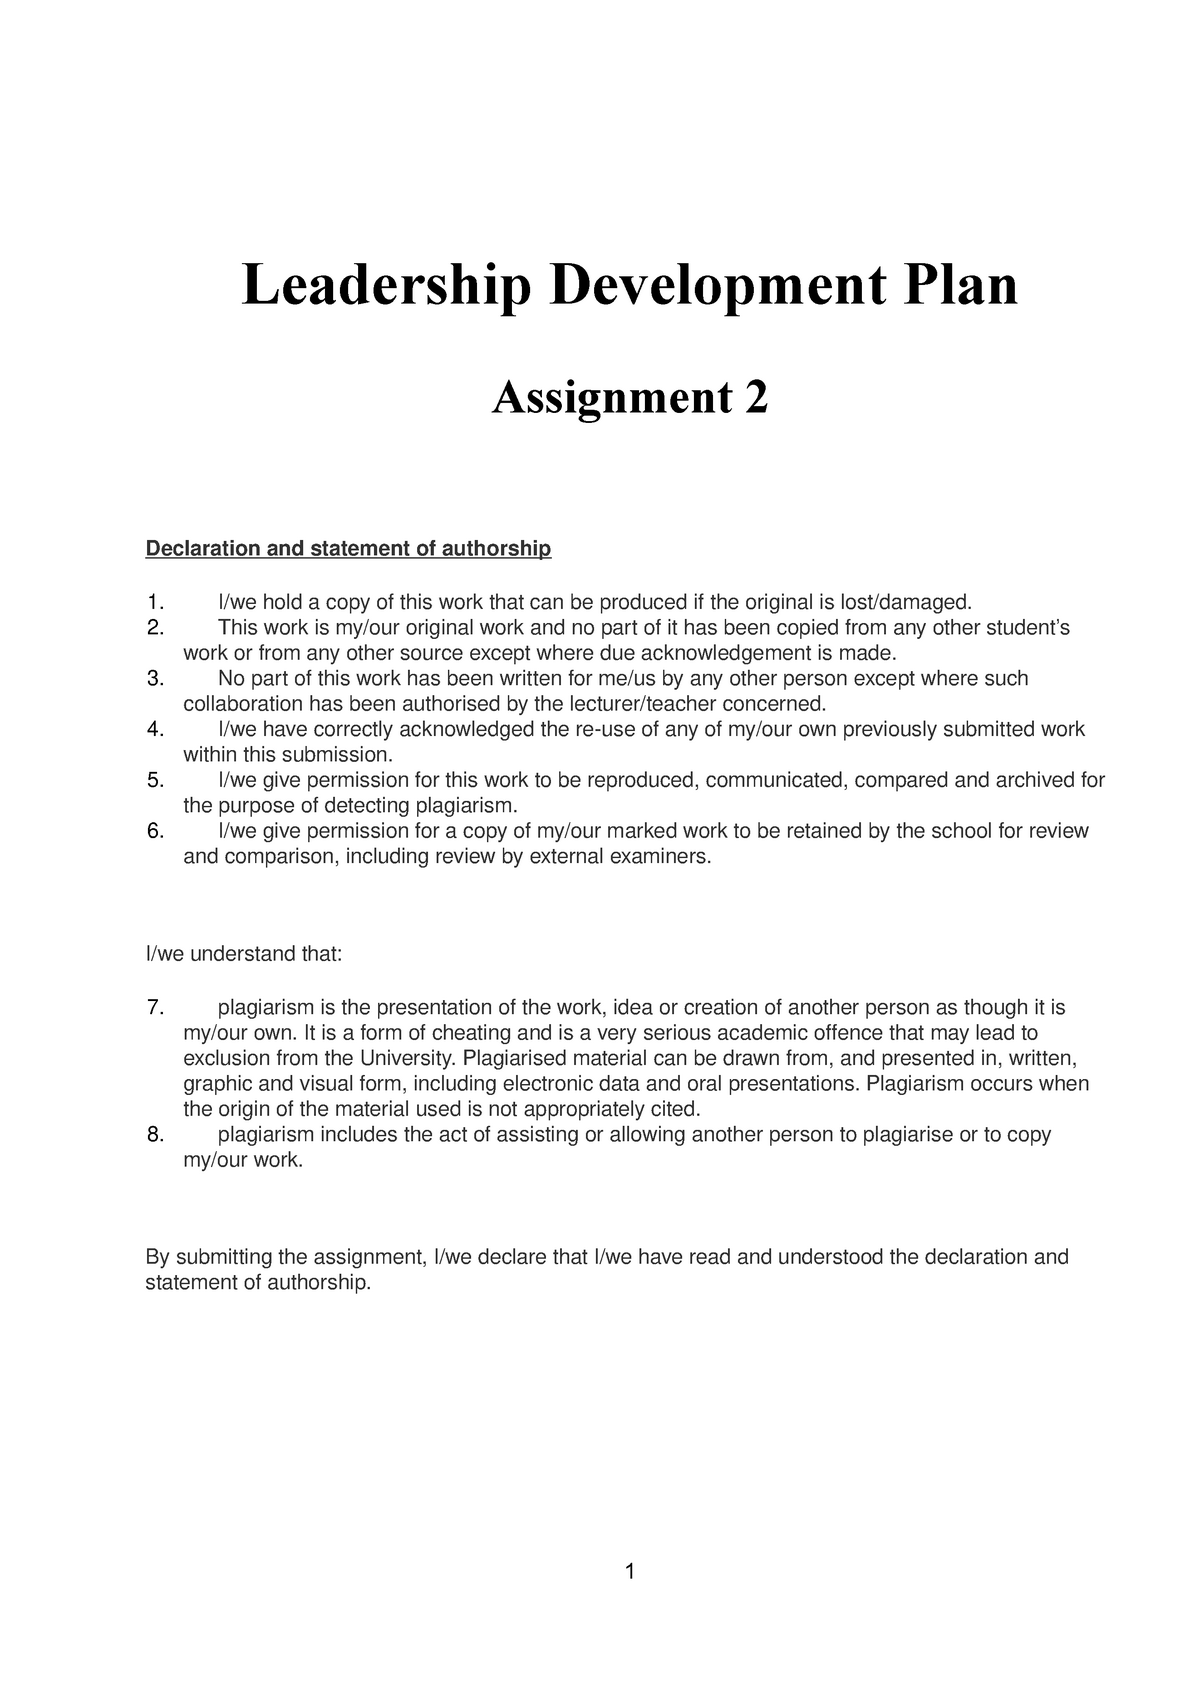 rmit leadership assignment 2